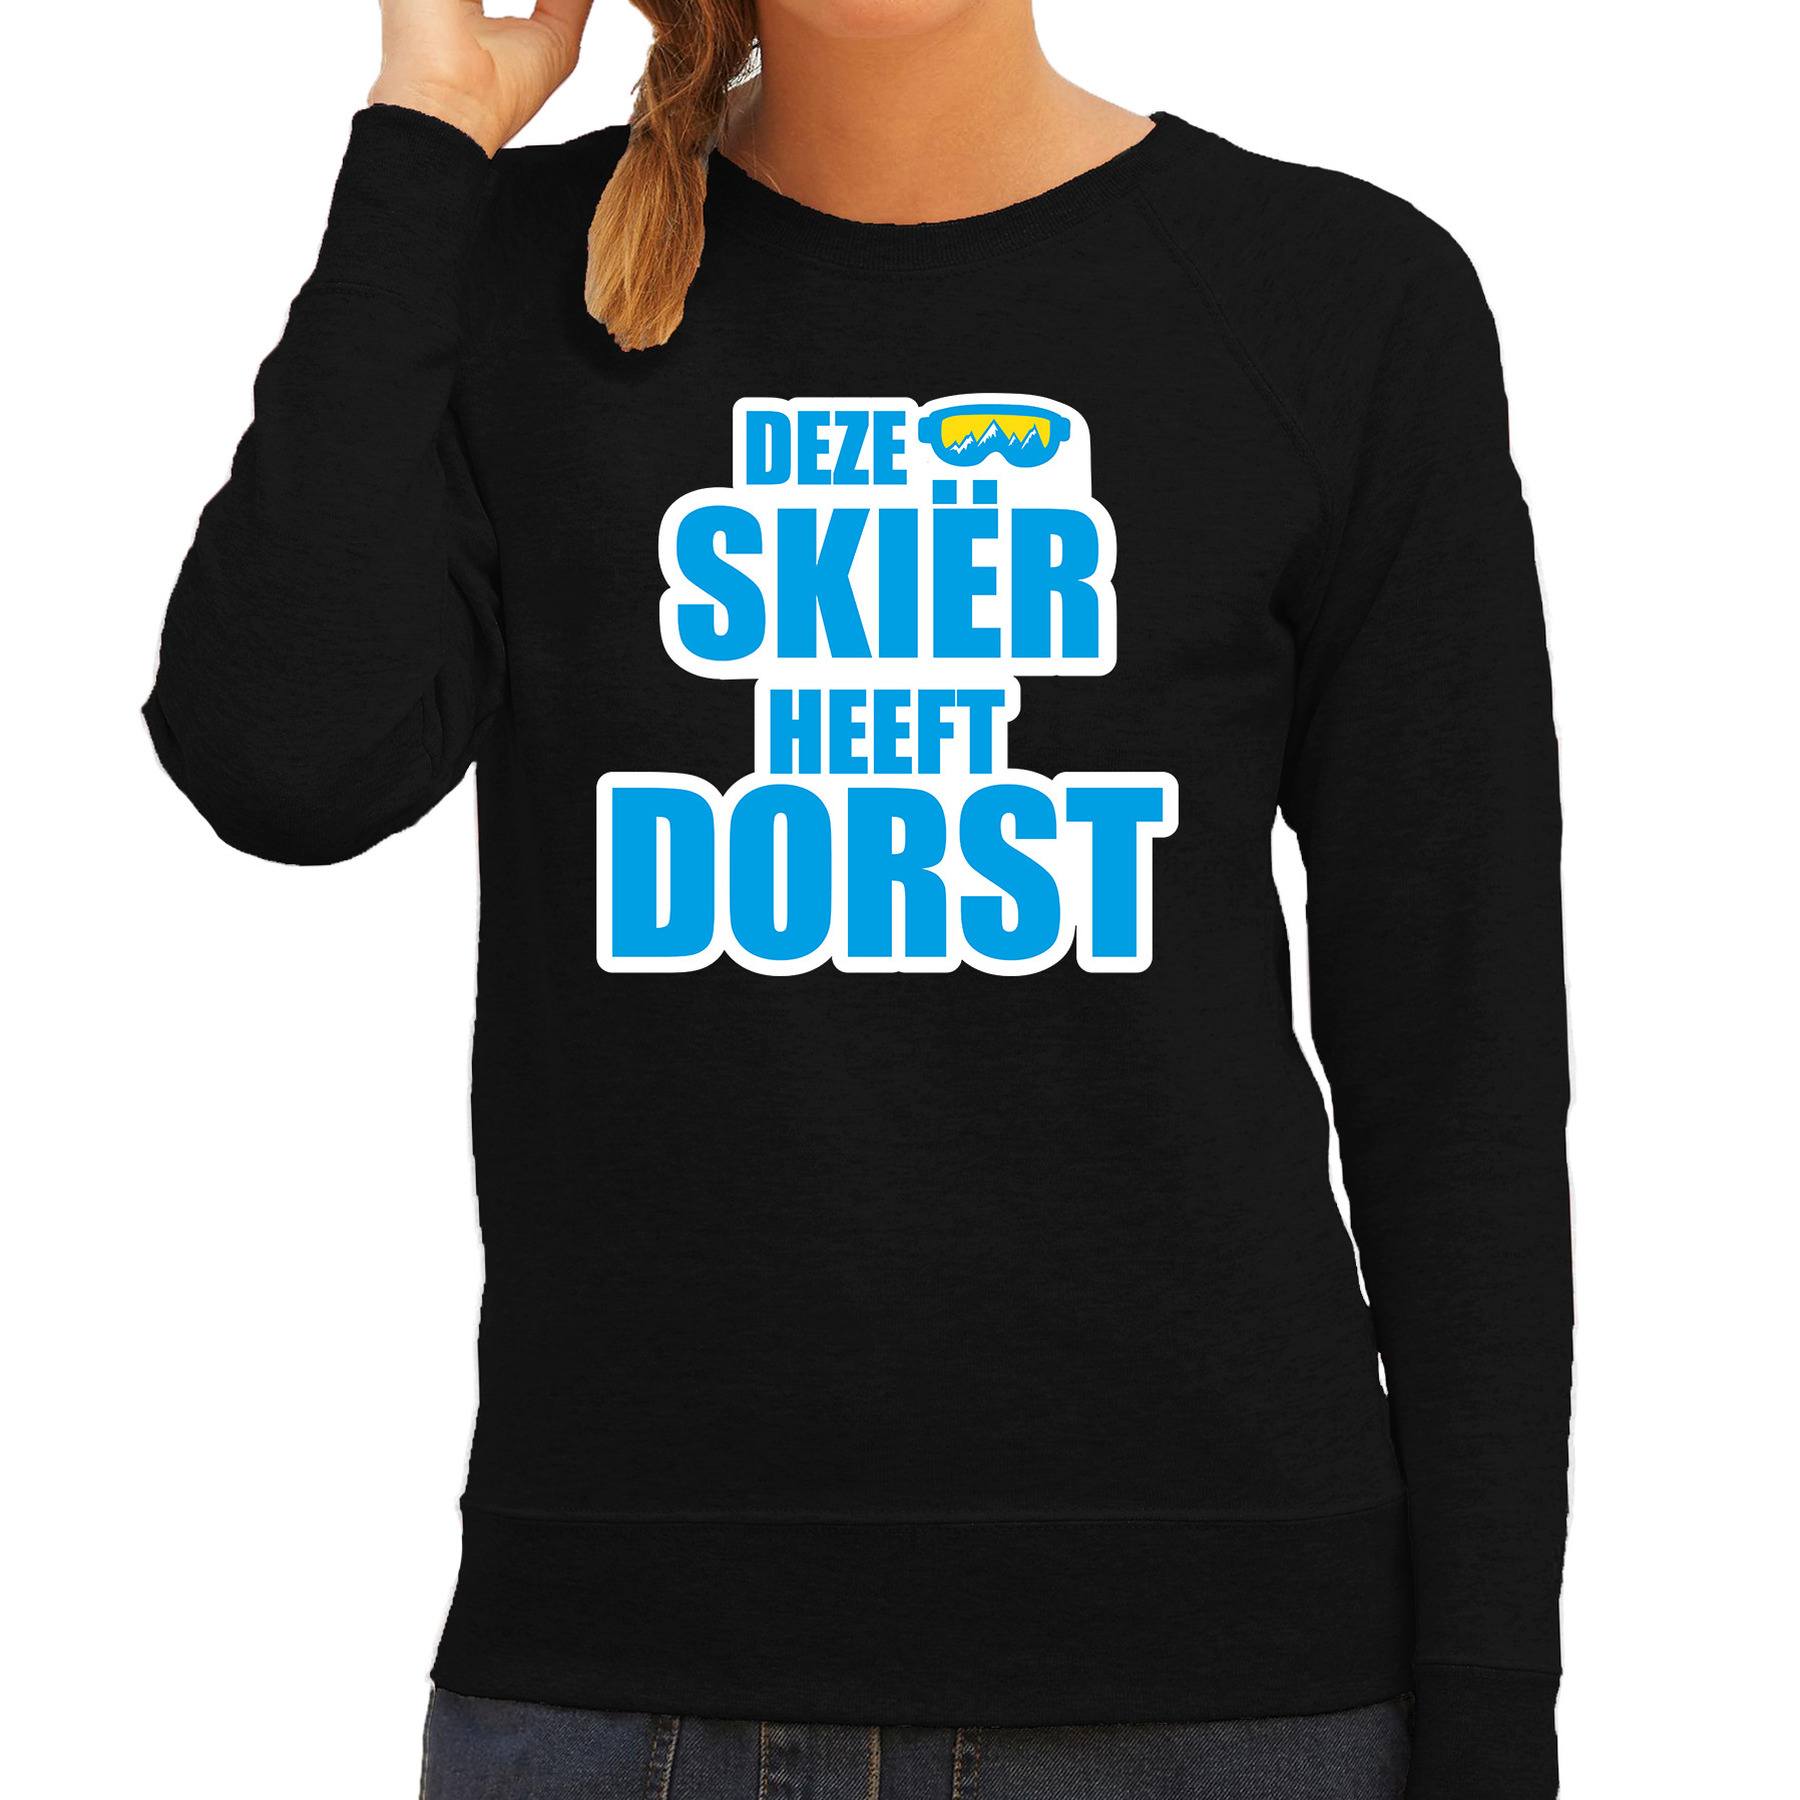 Apres ski trui Deze skieer heeft dorst zwart dames Wintersport sweater Foute apres ski outfit